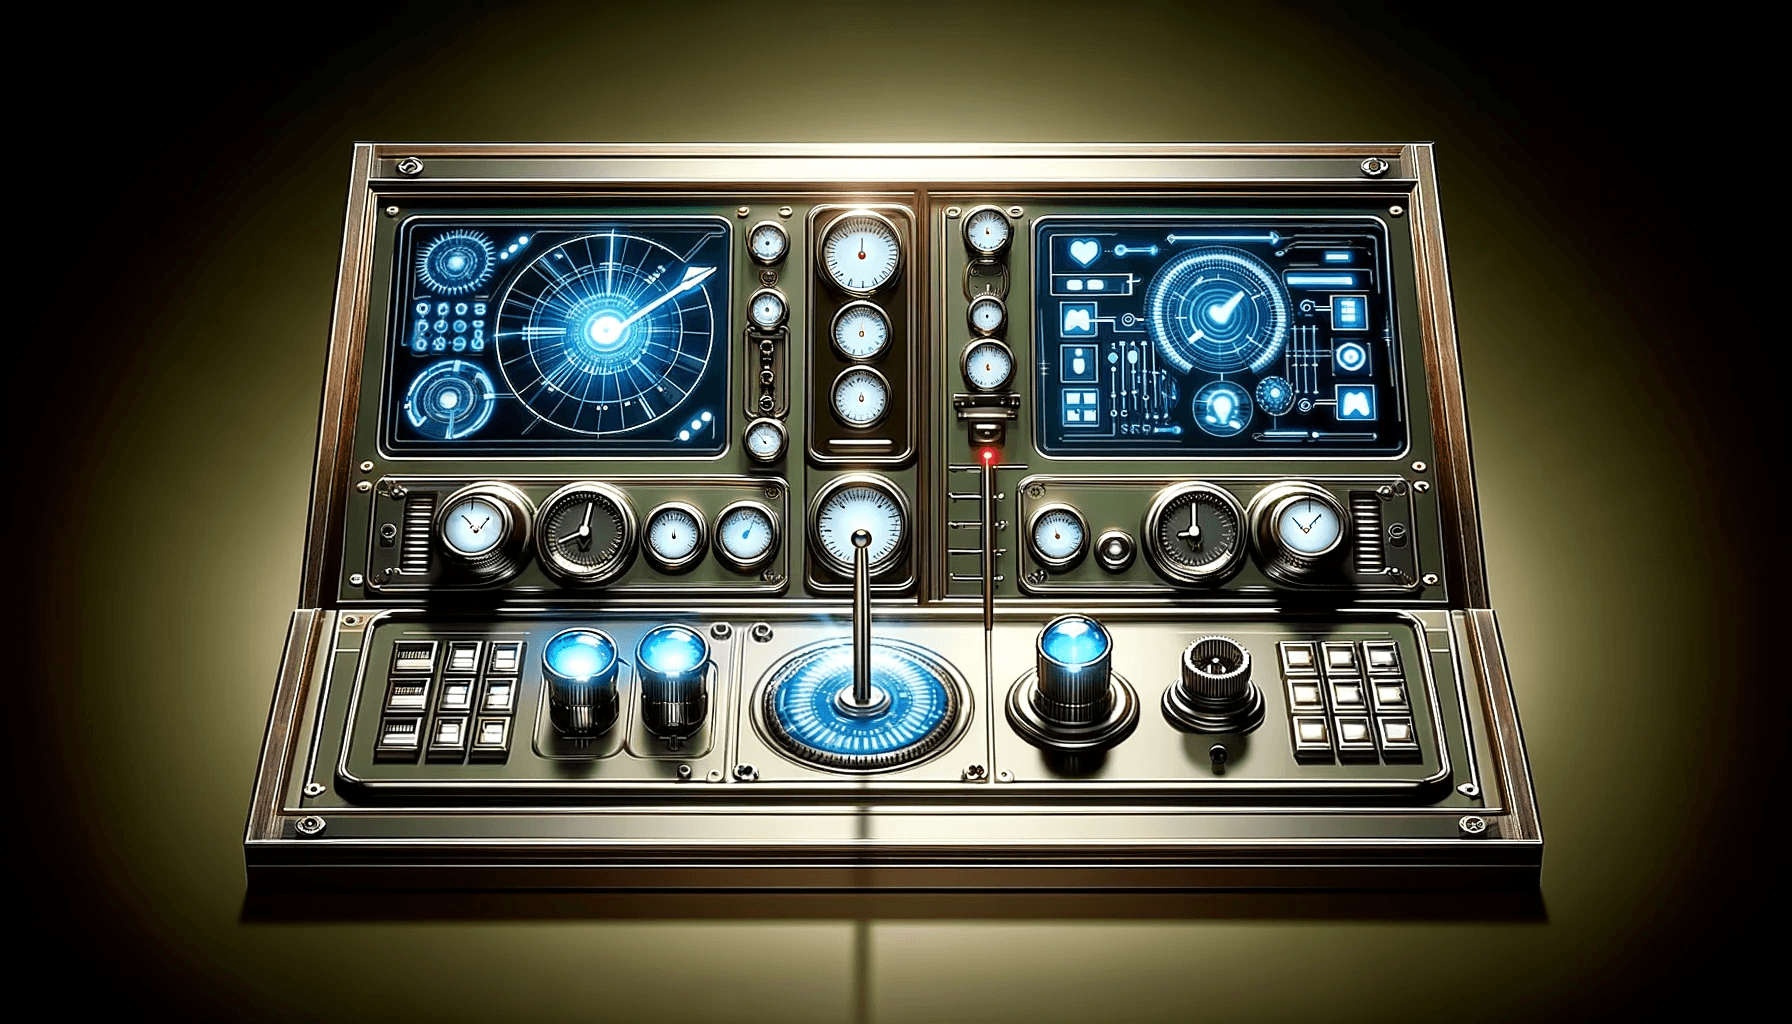 Futuristic control panel symbolizing advanced optimization techniques for Google My Business listings.